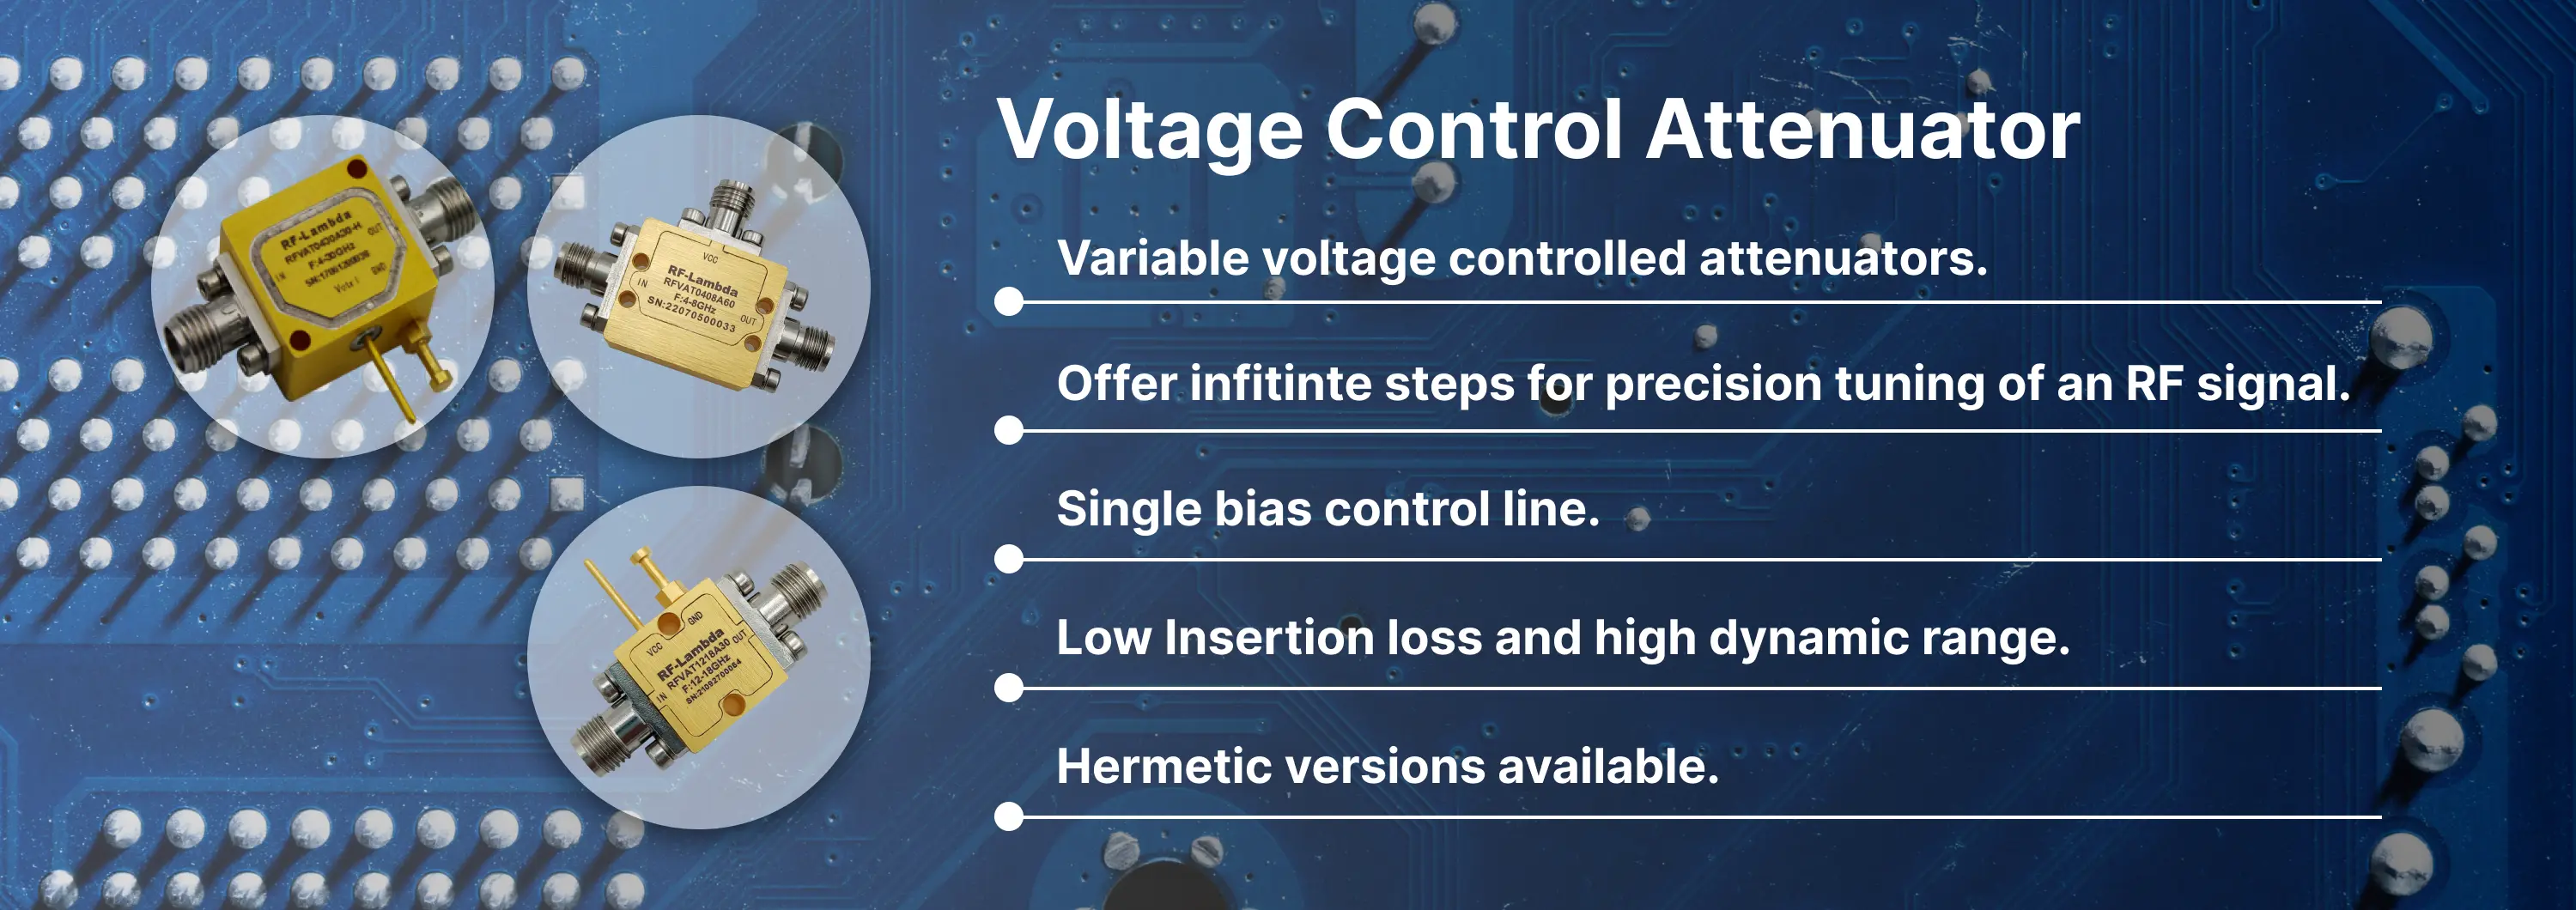 Voltage Control Attenuator Banner